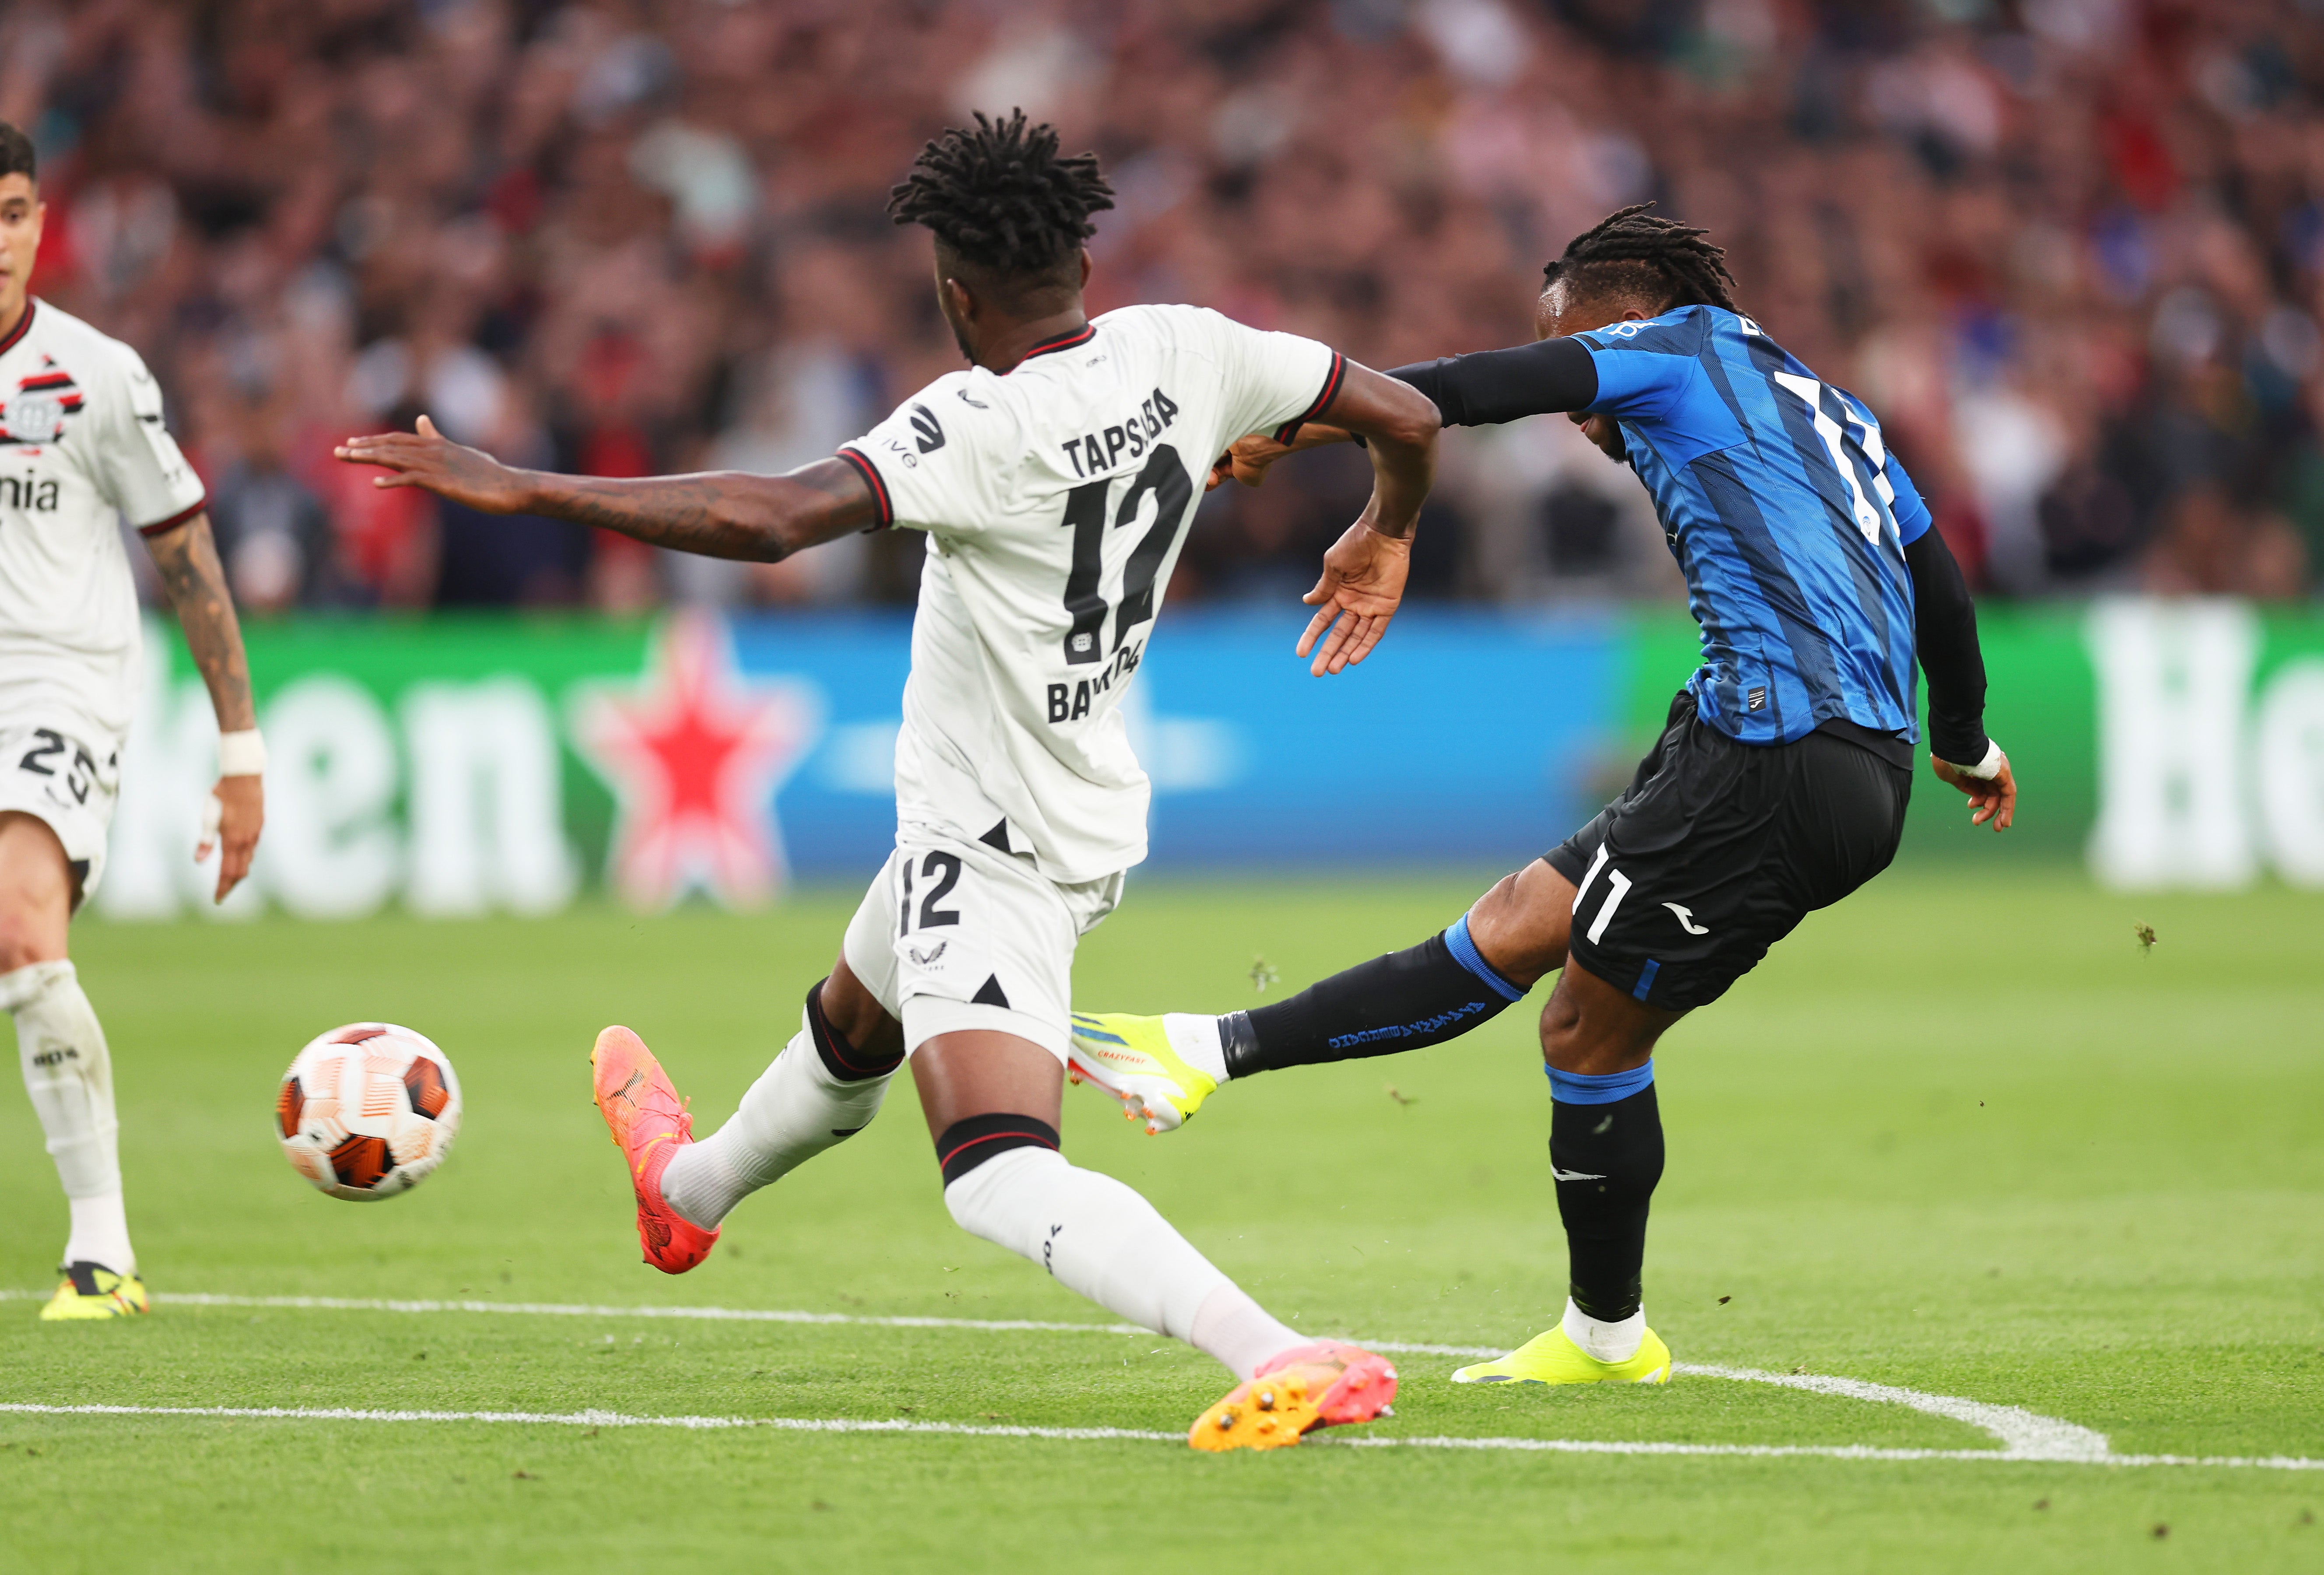 Ademola Lookman scored a hat-trick as Atalanta’s positive display gave them control